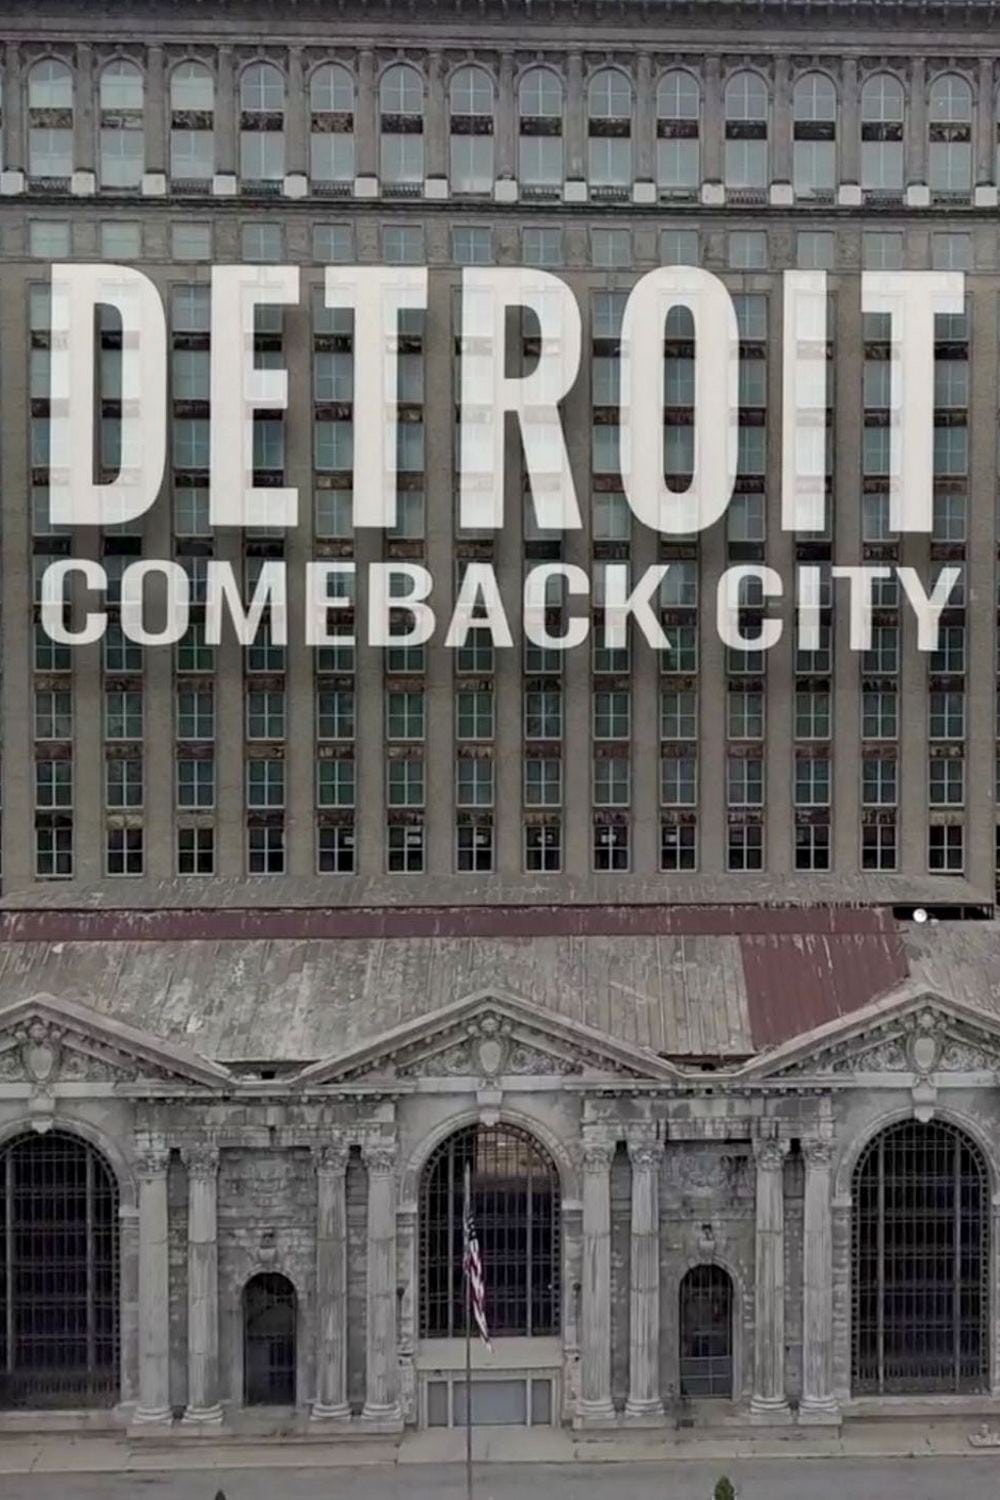 Detroit: Comeback City (2018)